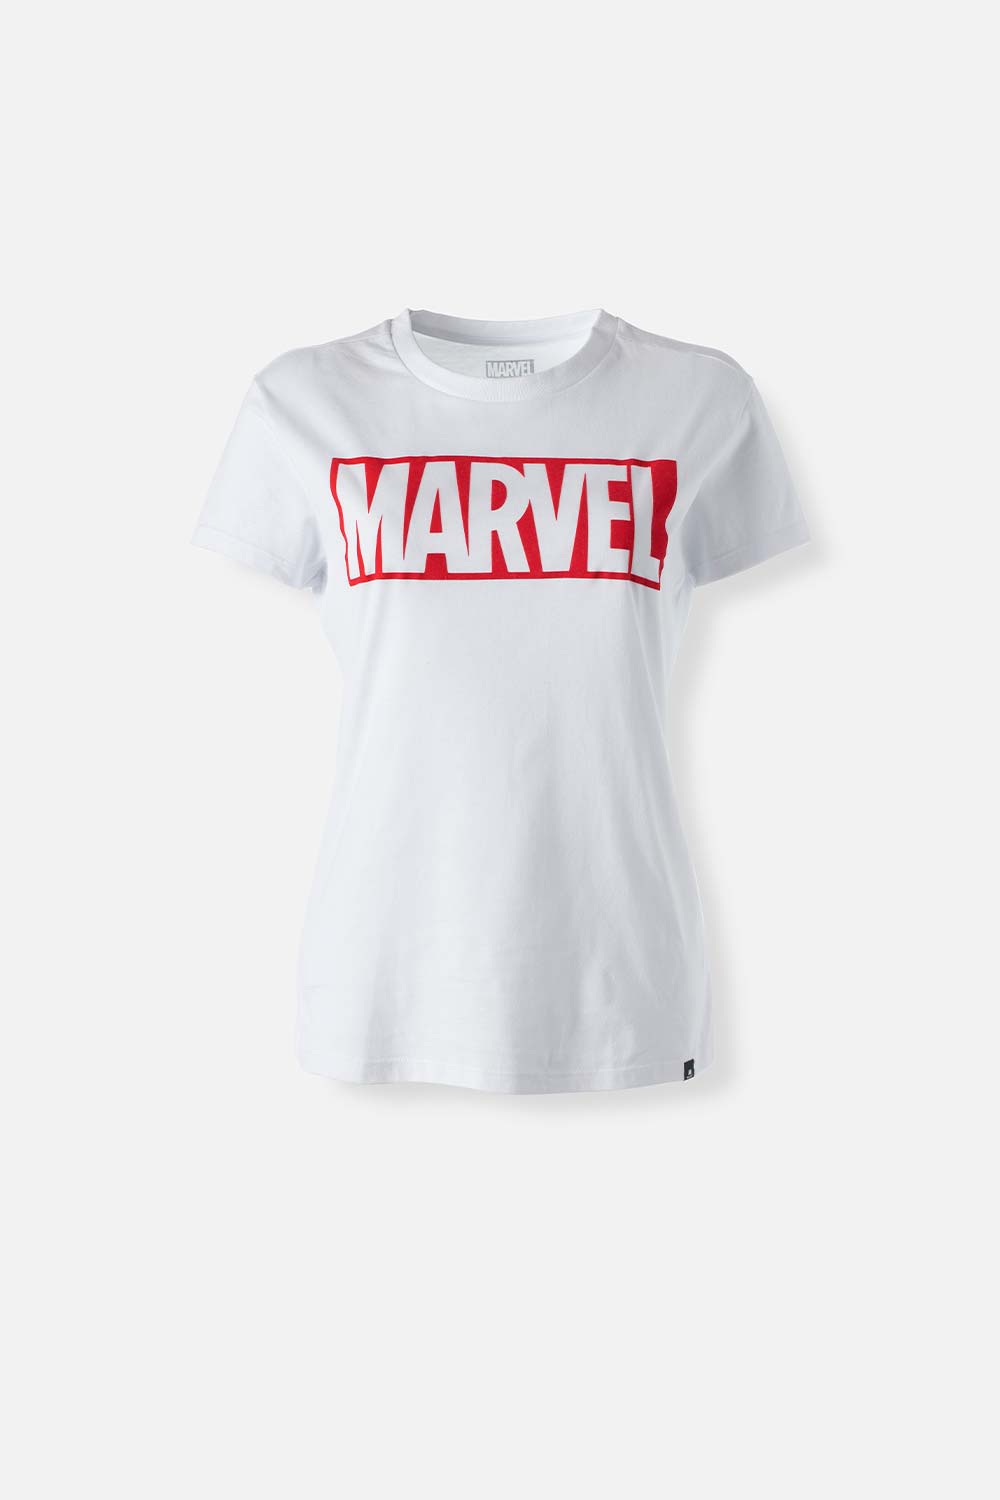 Camiseta de mujer, manga corta slim fit blanca de ©Marvel L-0